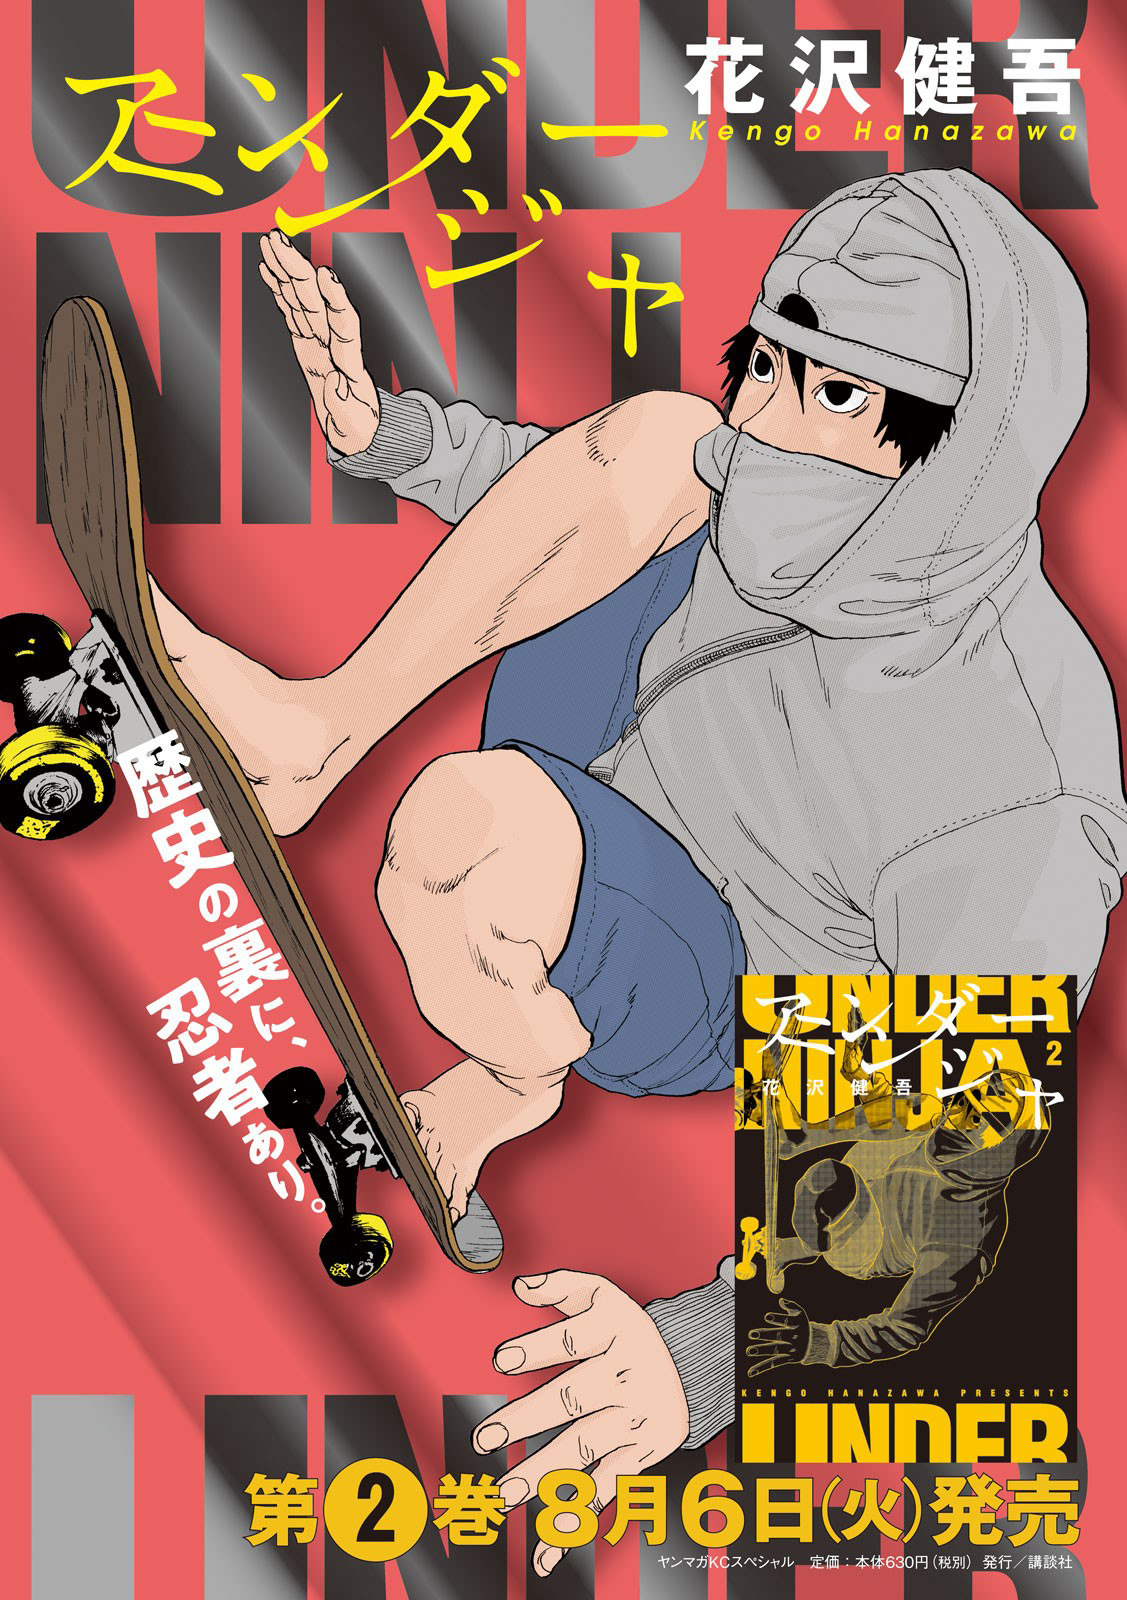 Chapter 21 | Under Ninja Wiki | Fandom